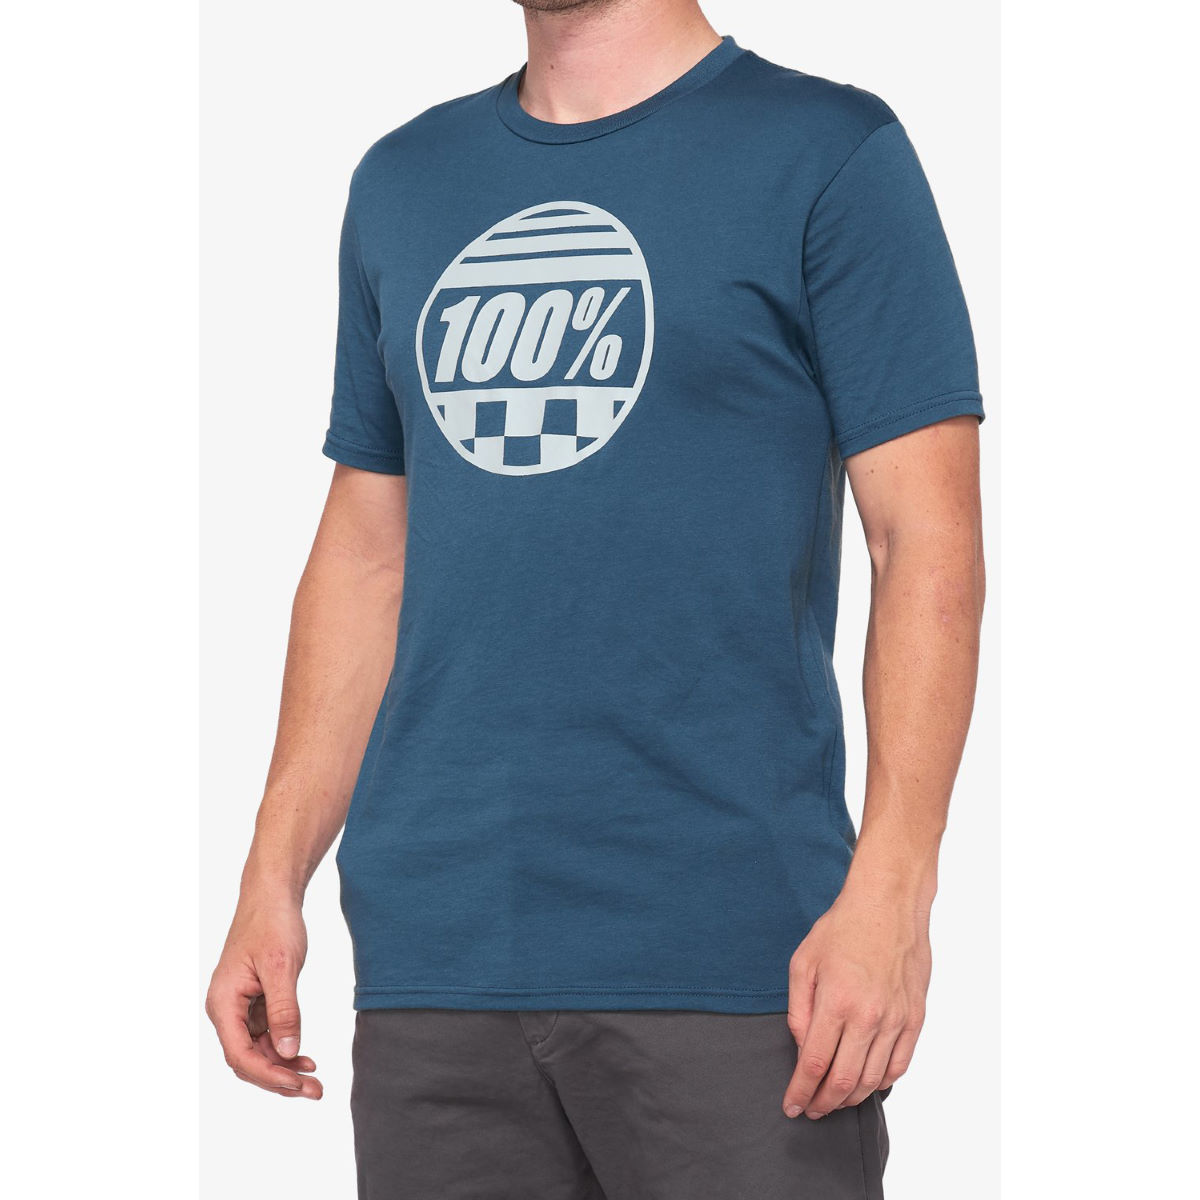 100% Sector T-Shirt - Camisetas